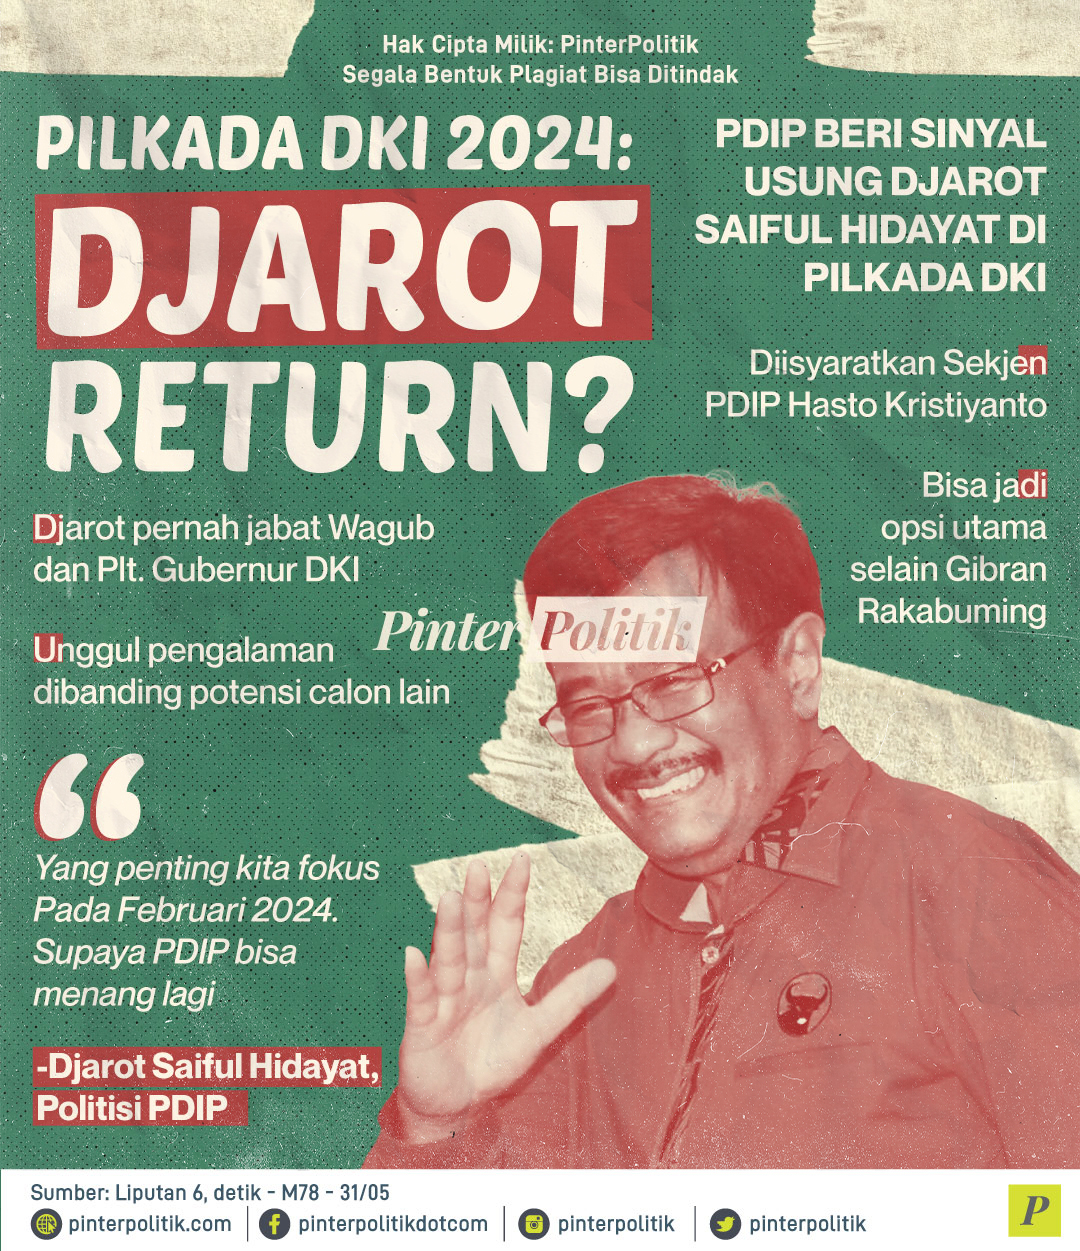 Pilkada DKI 2024 Djarot Return